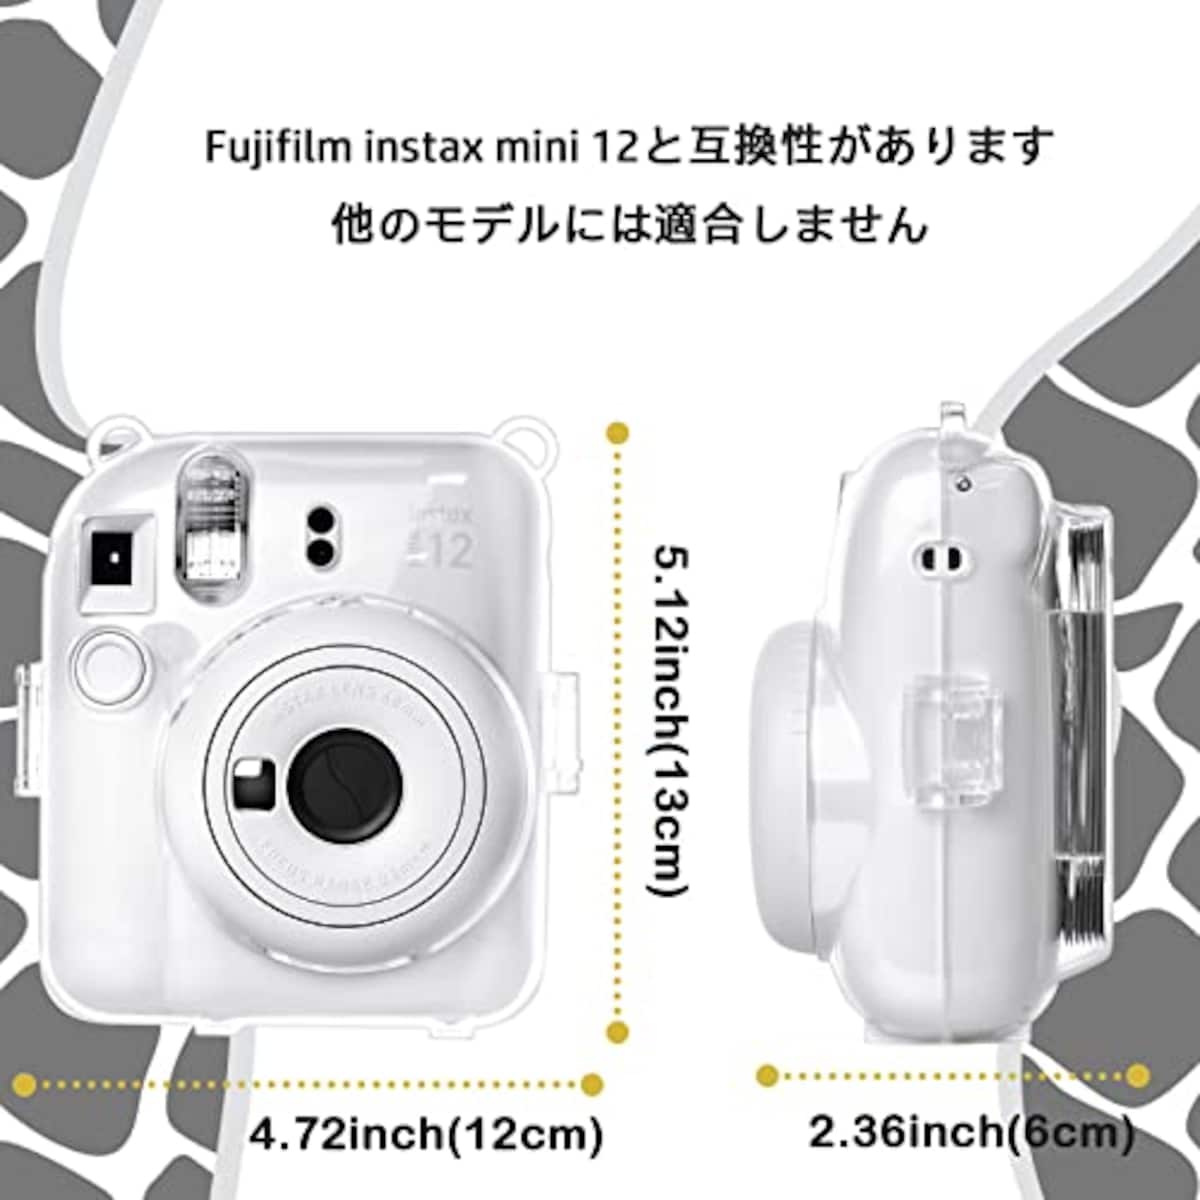  HIYQIN mini12 ケース 富士フイルム Instax Mini 12 カメラ用保護クリアケース クリスタルハードシェルカバー ショルダーストラップ付き カメラステッカー画像2 